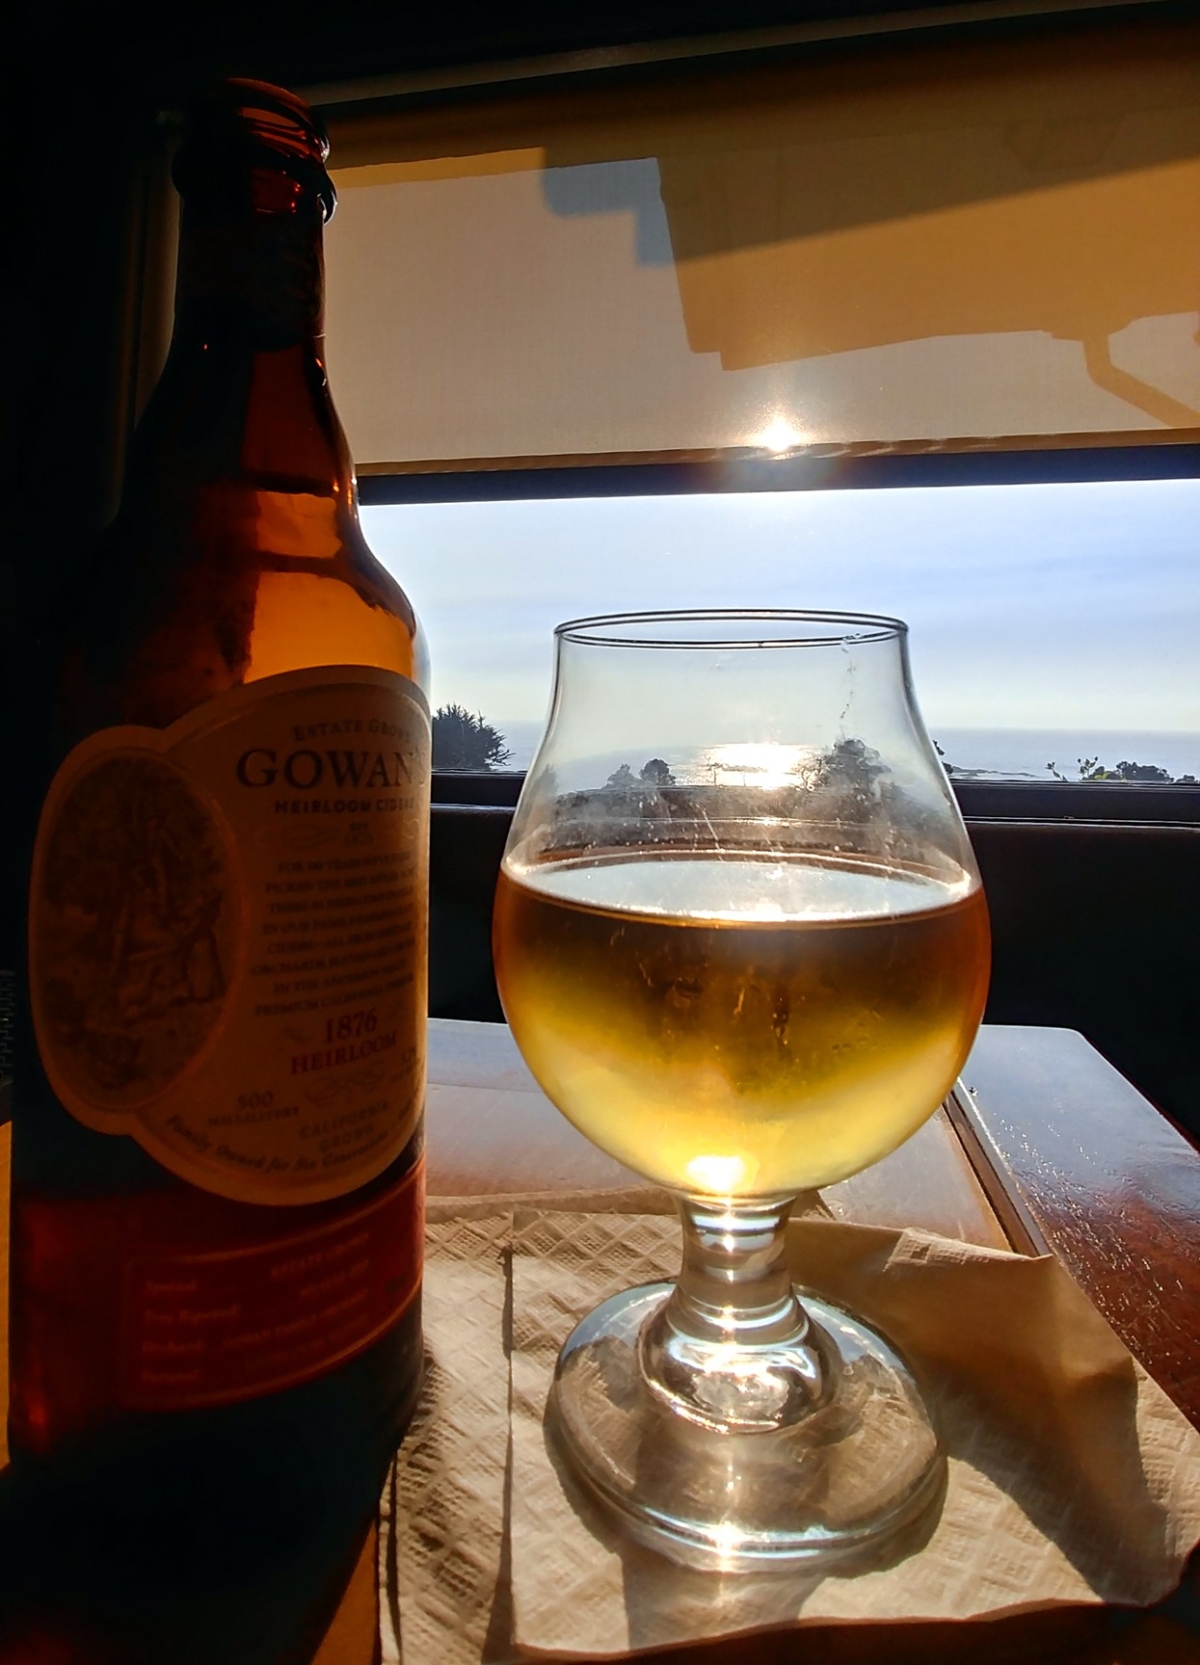 Gowan's Apple Cider at sunset. Ole's Whale Watching Bar, Little River Inn, Little River California.